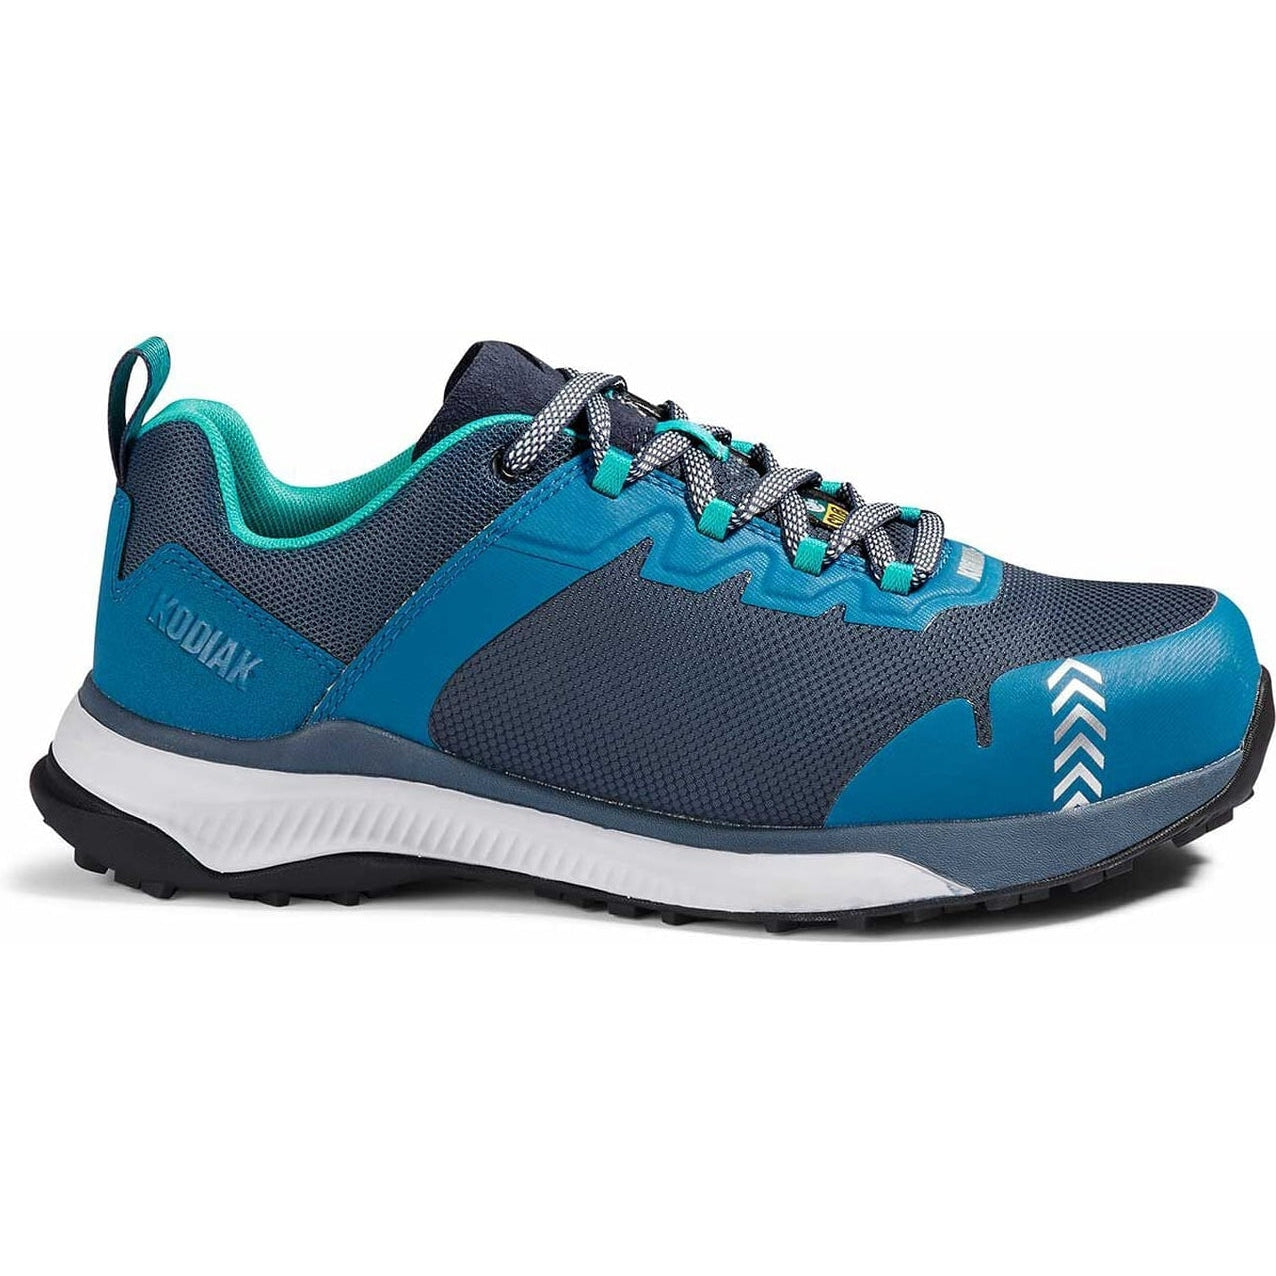 Kodiak Women's Quicktrail Low CT Athletic Work Shoe -Blueberry- 4TGWBL  - Overlook Boots